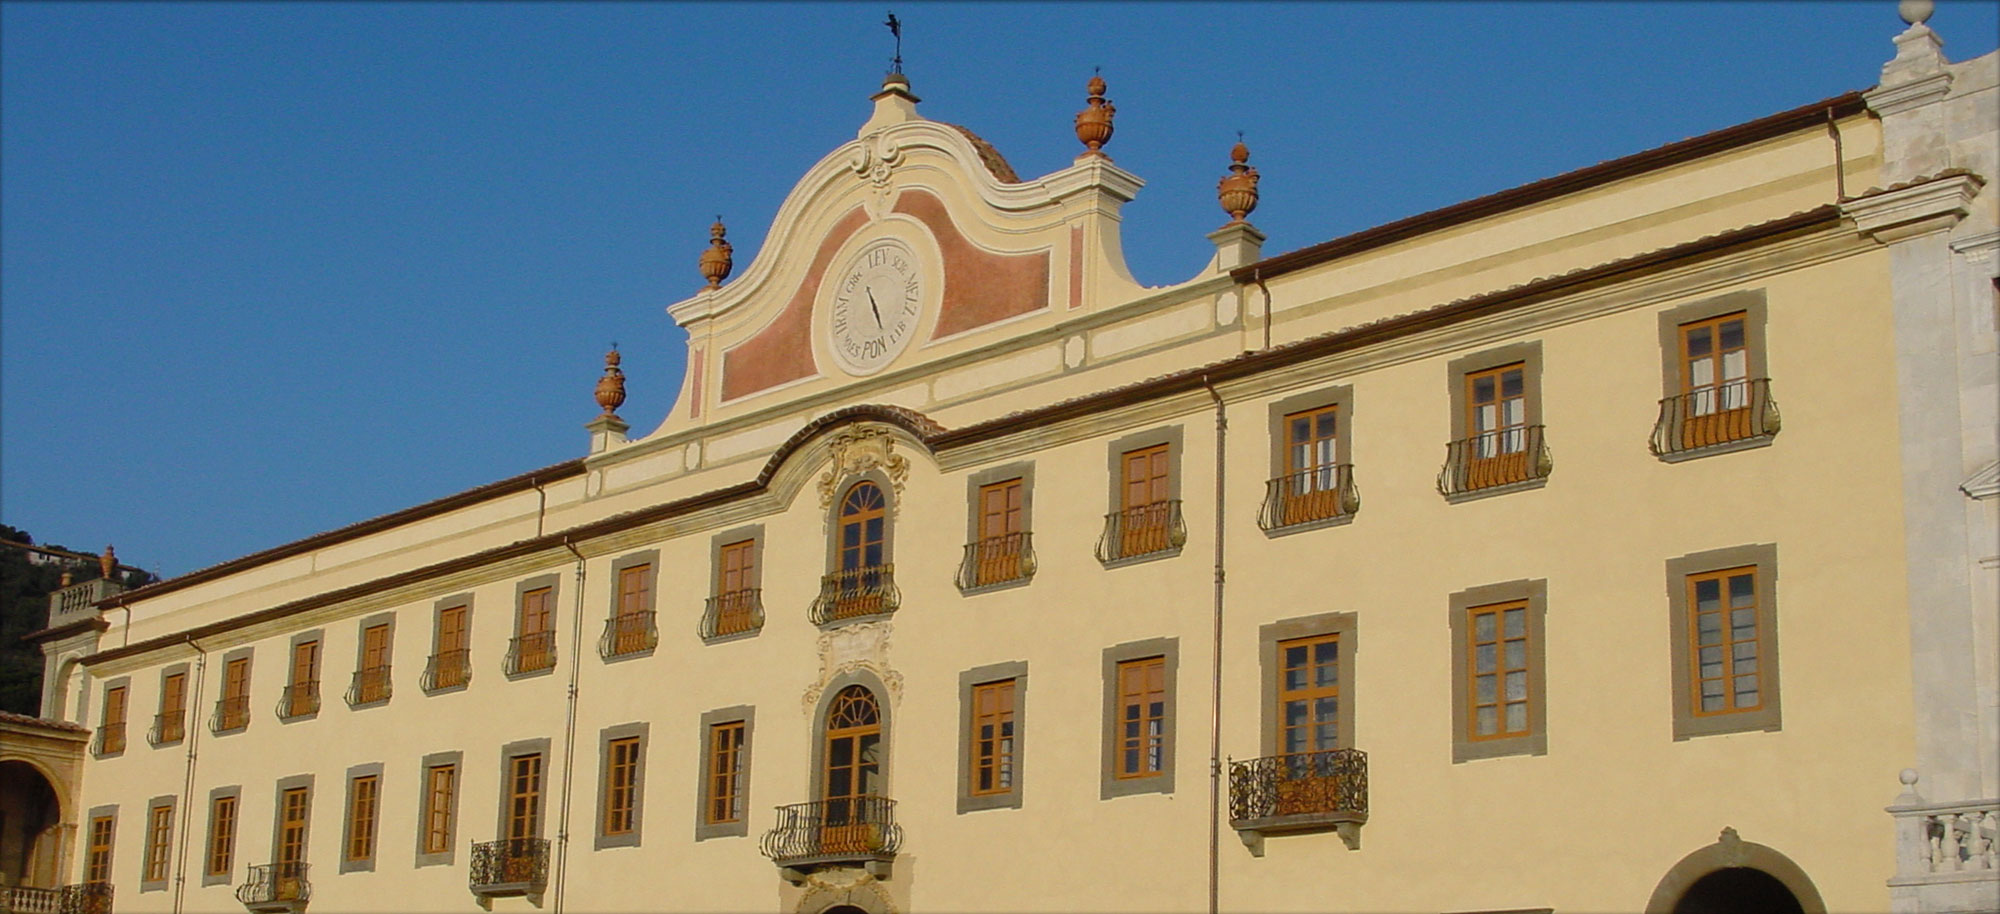 Corte Tommasi - Natural History Museum of Calci - Surroundings Tuscany apartments